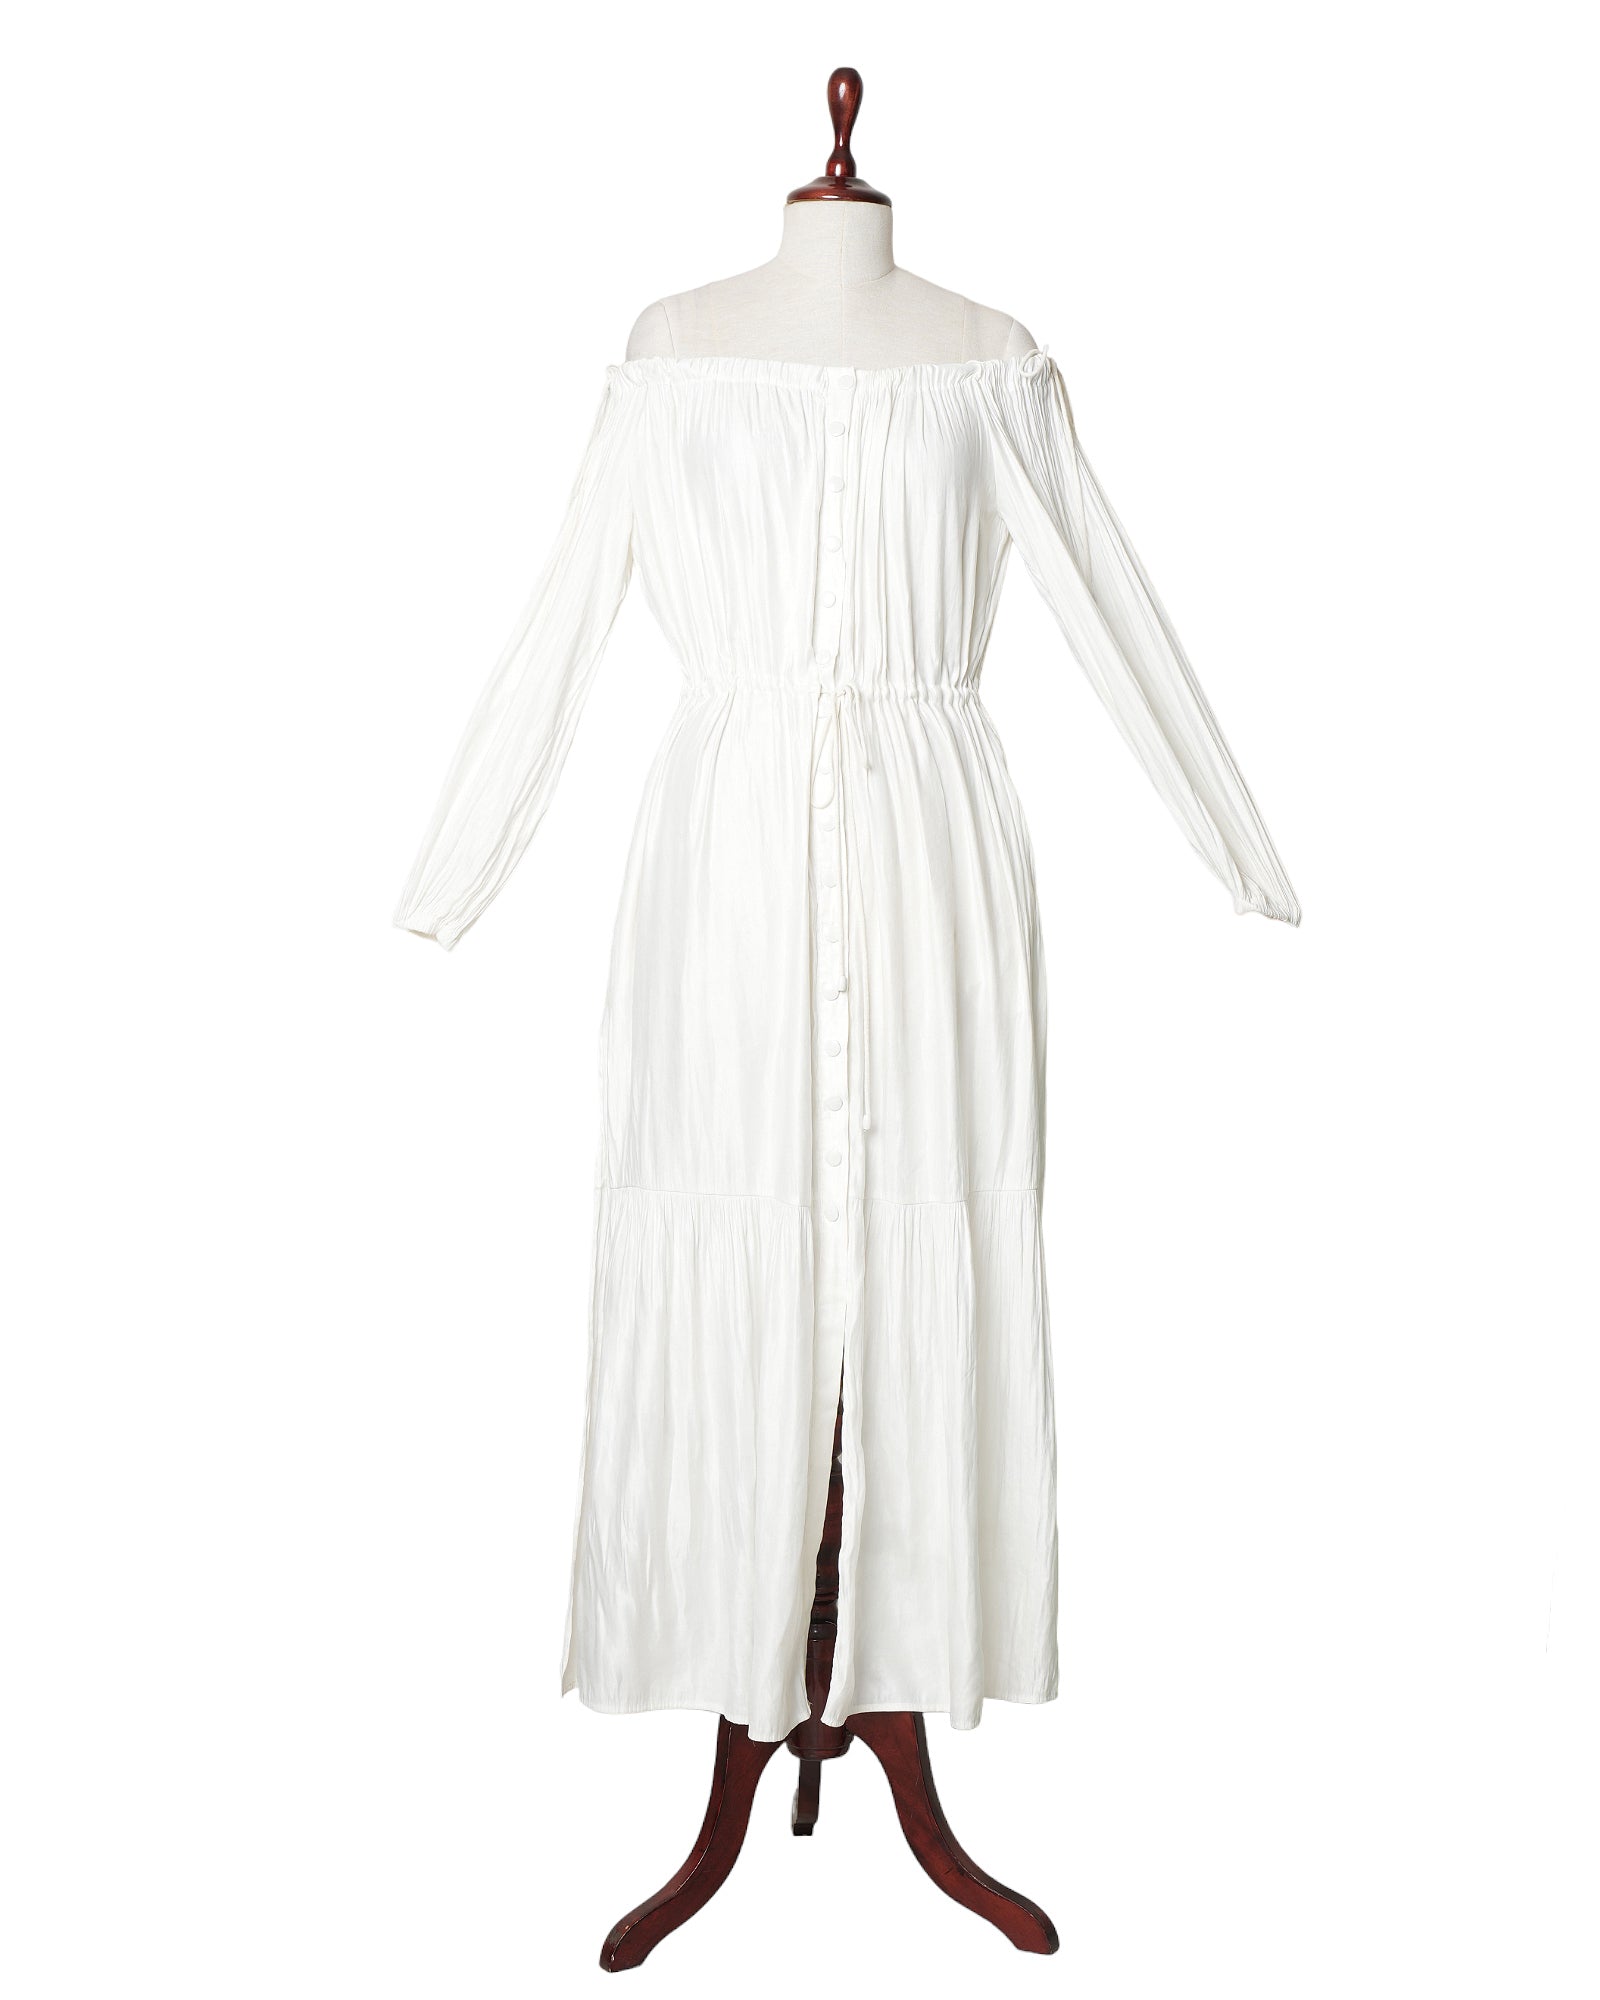 Alice MCCall White Dress